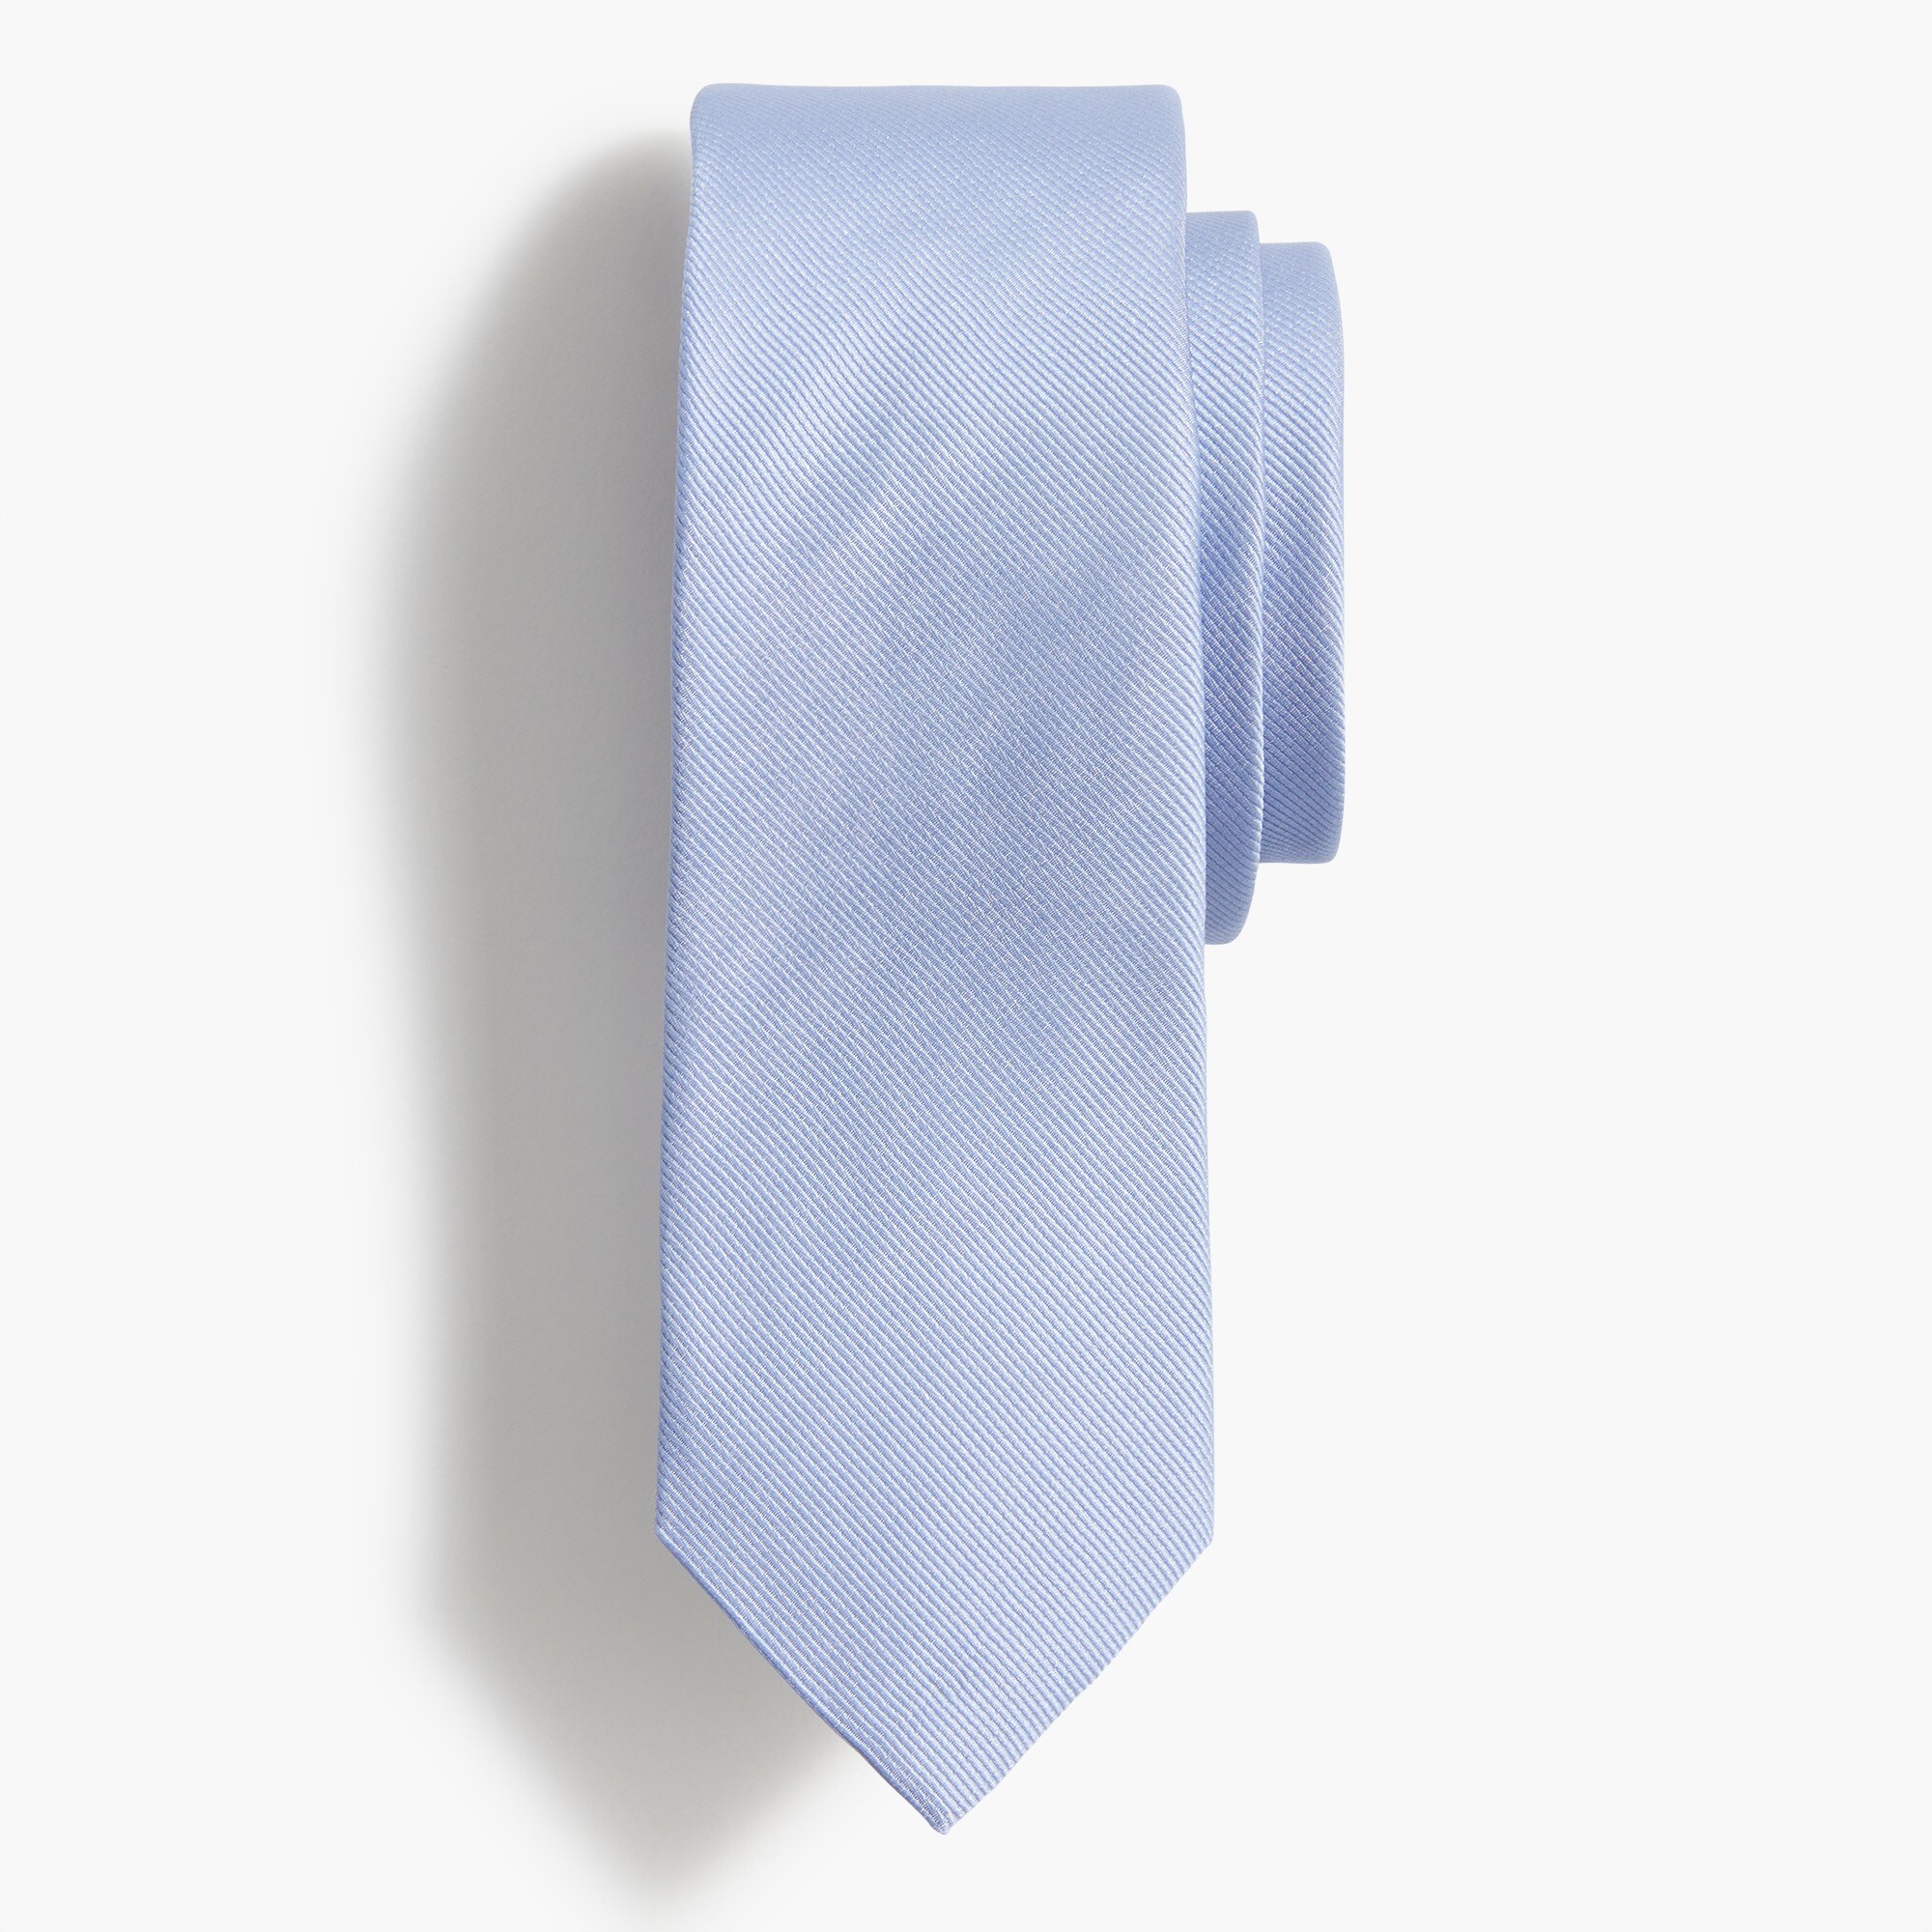  Solid tie